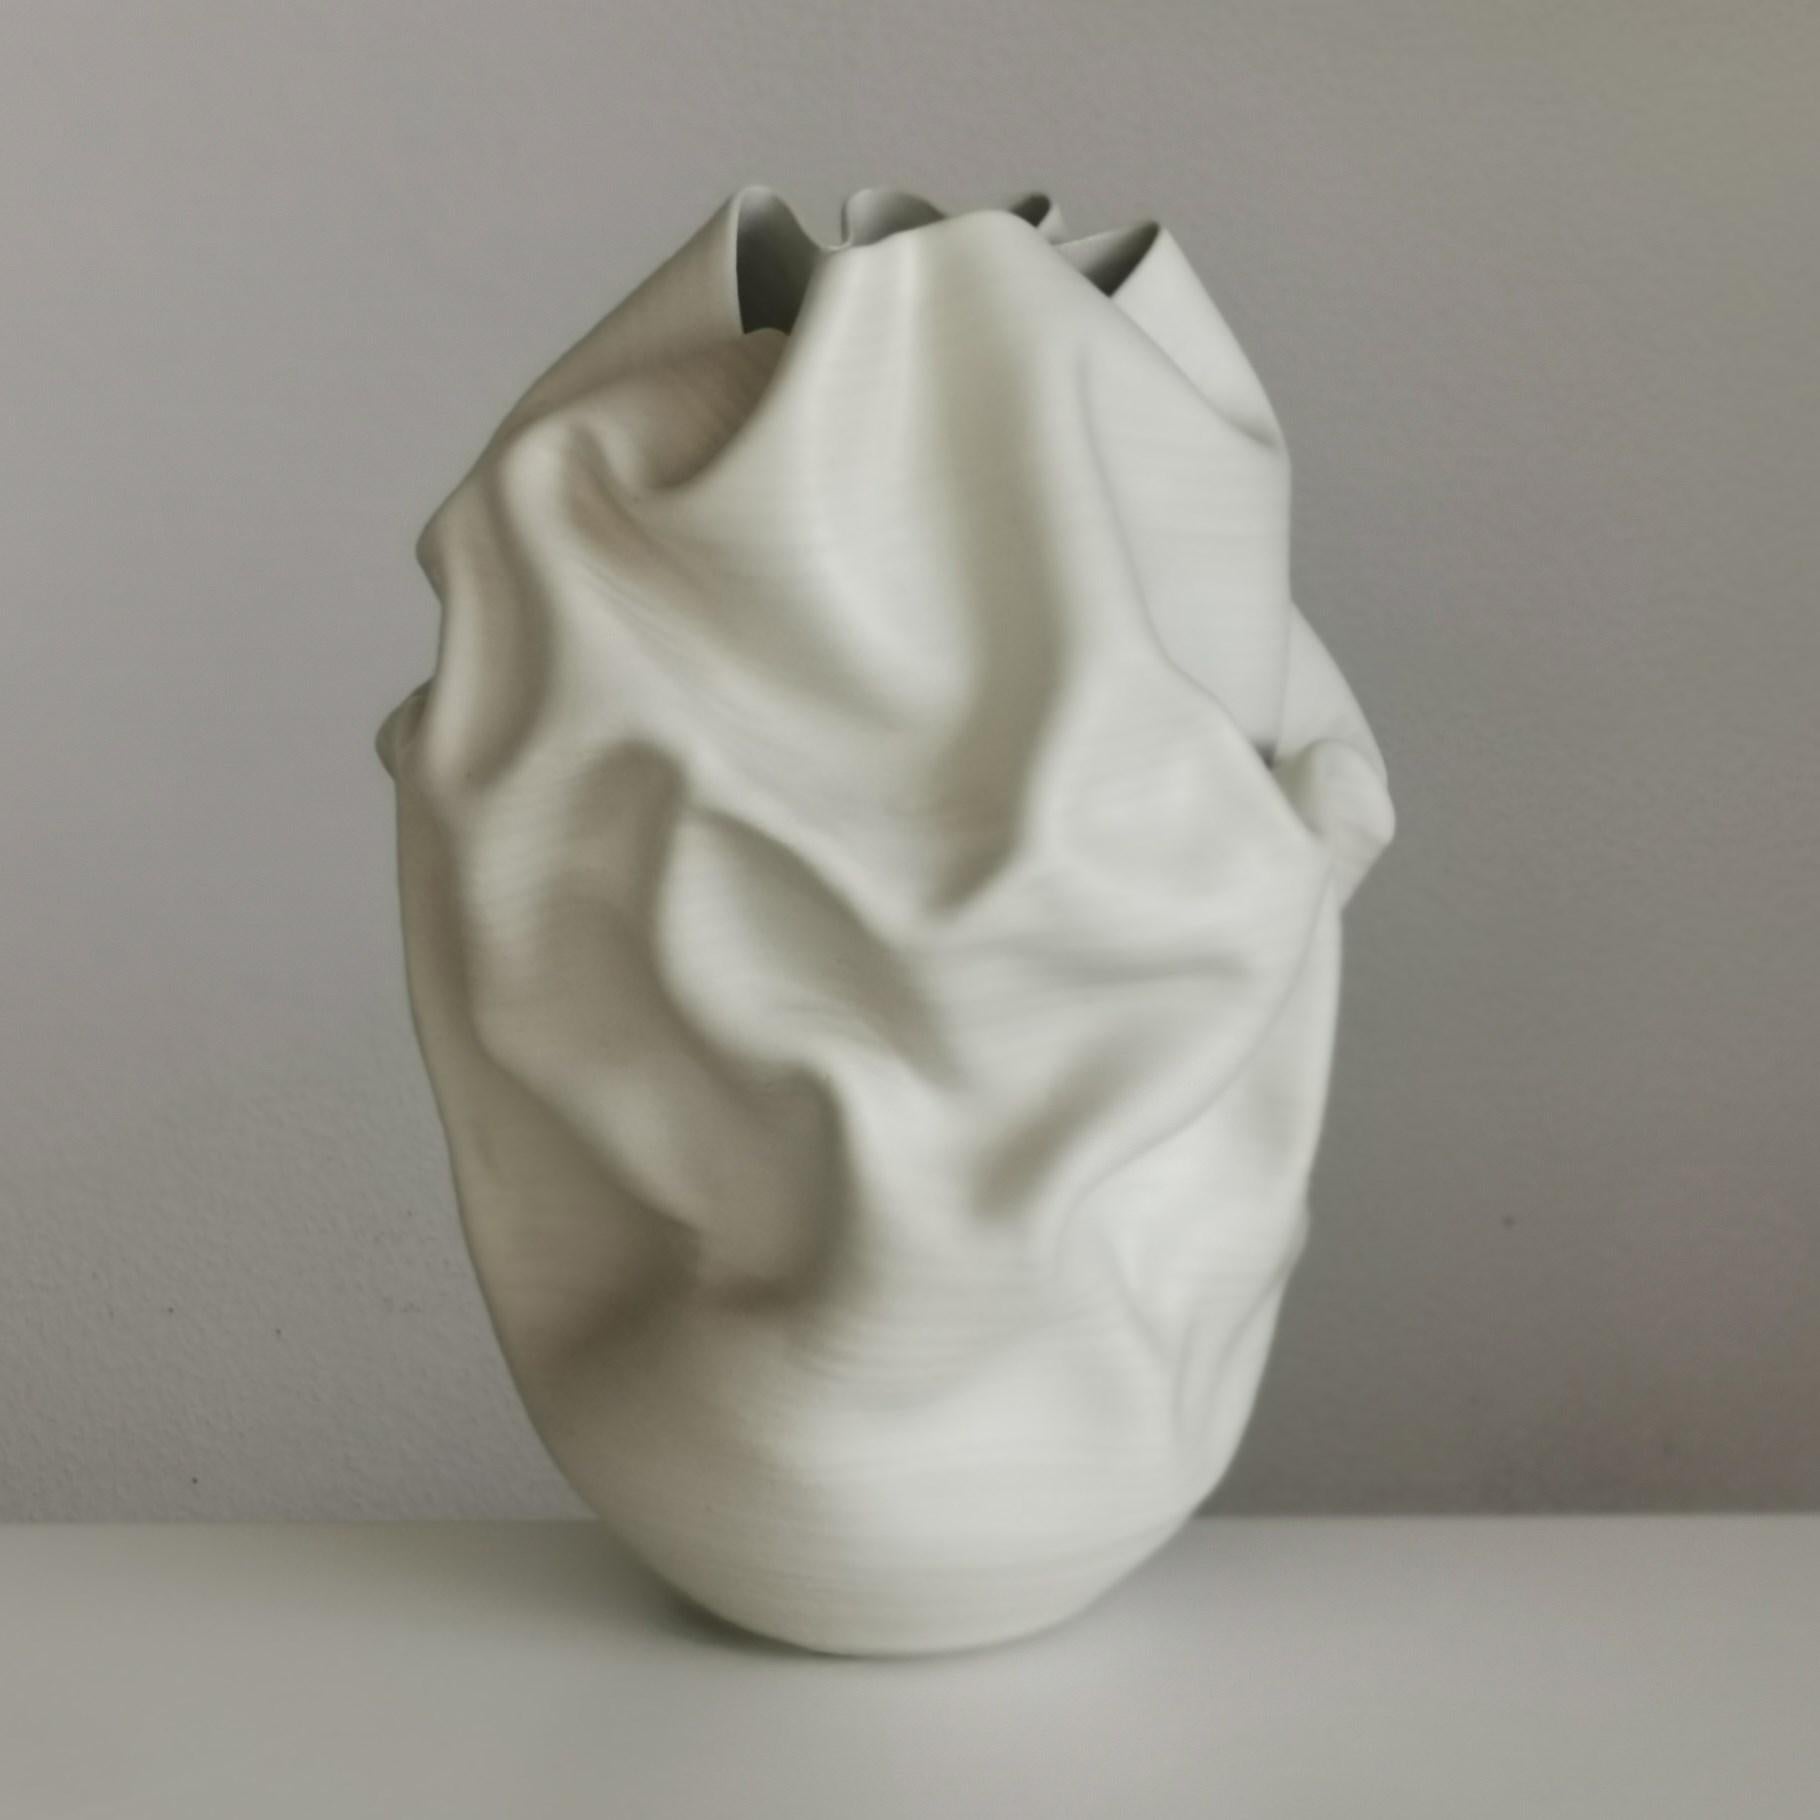 Undulating Crumpled Form No 51, a Ceramic Vessel by Nicholas Arroyave-Portela 4